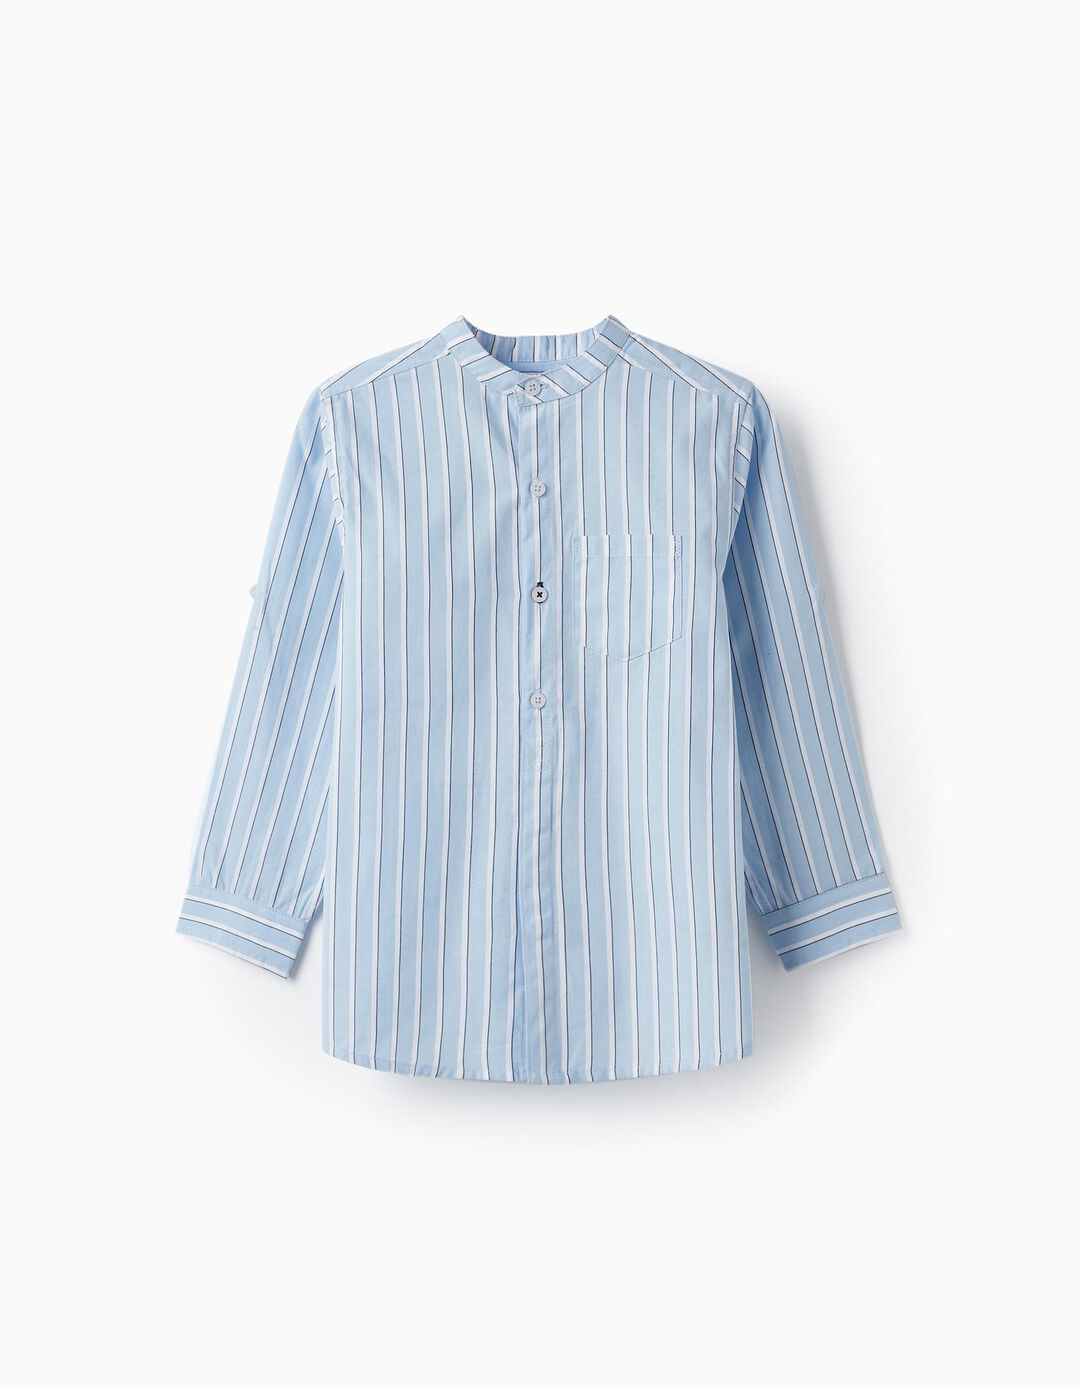 Striped Cotton Shirt for Boys, Blue/White